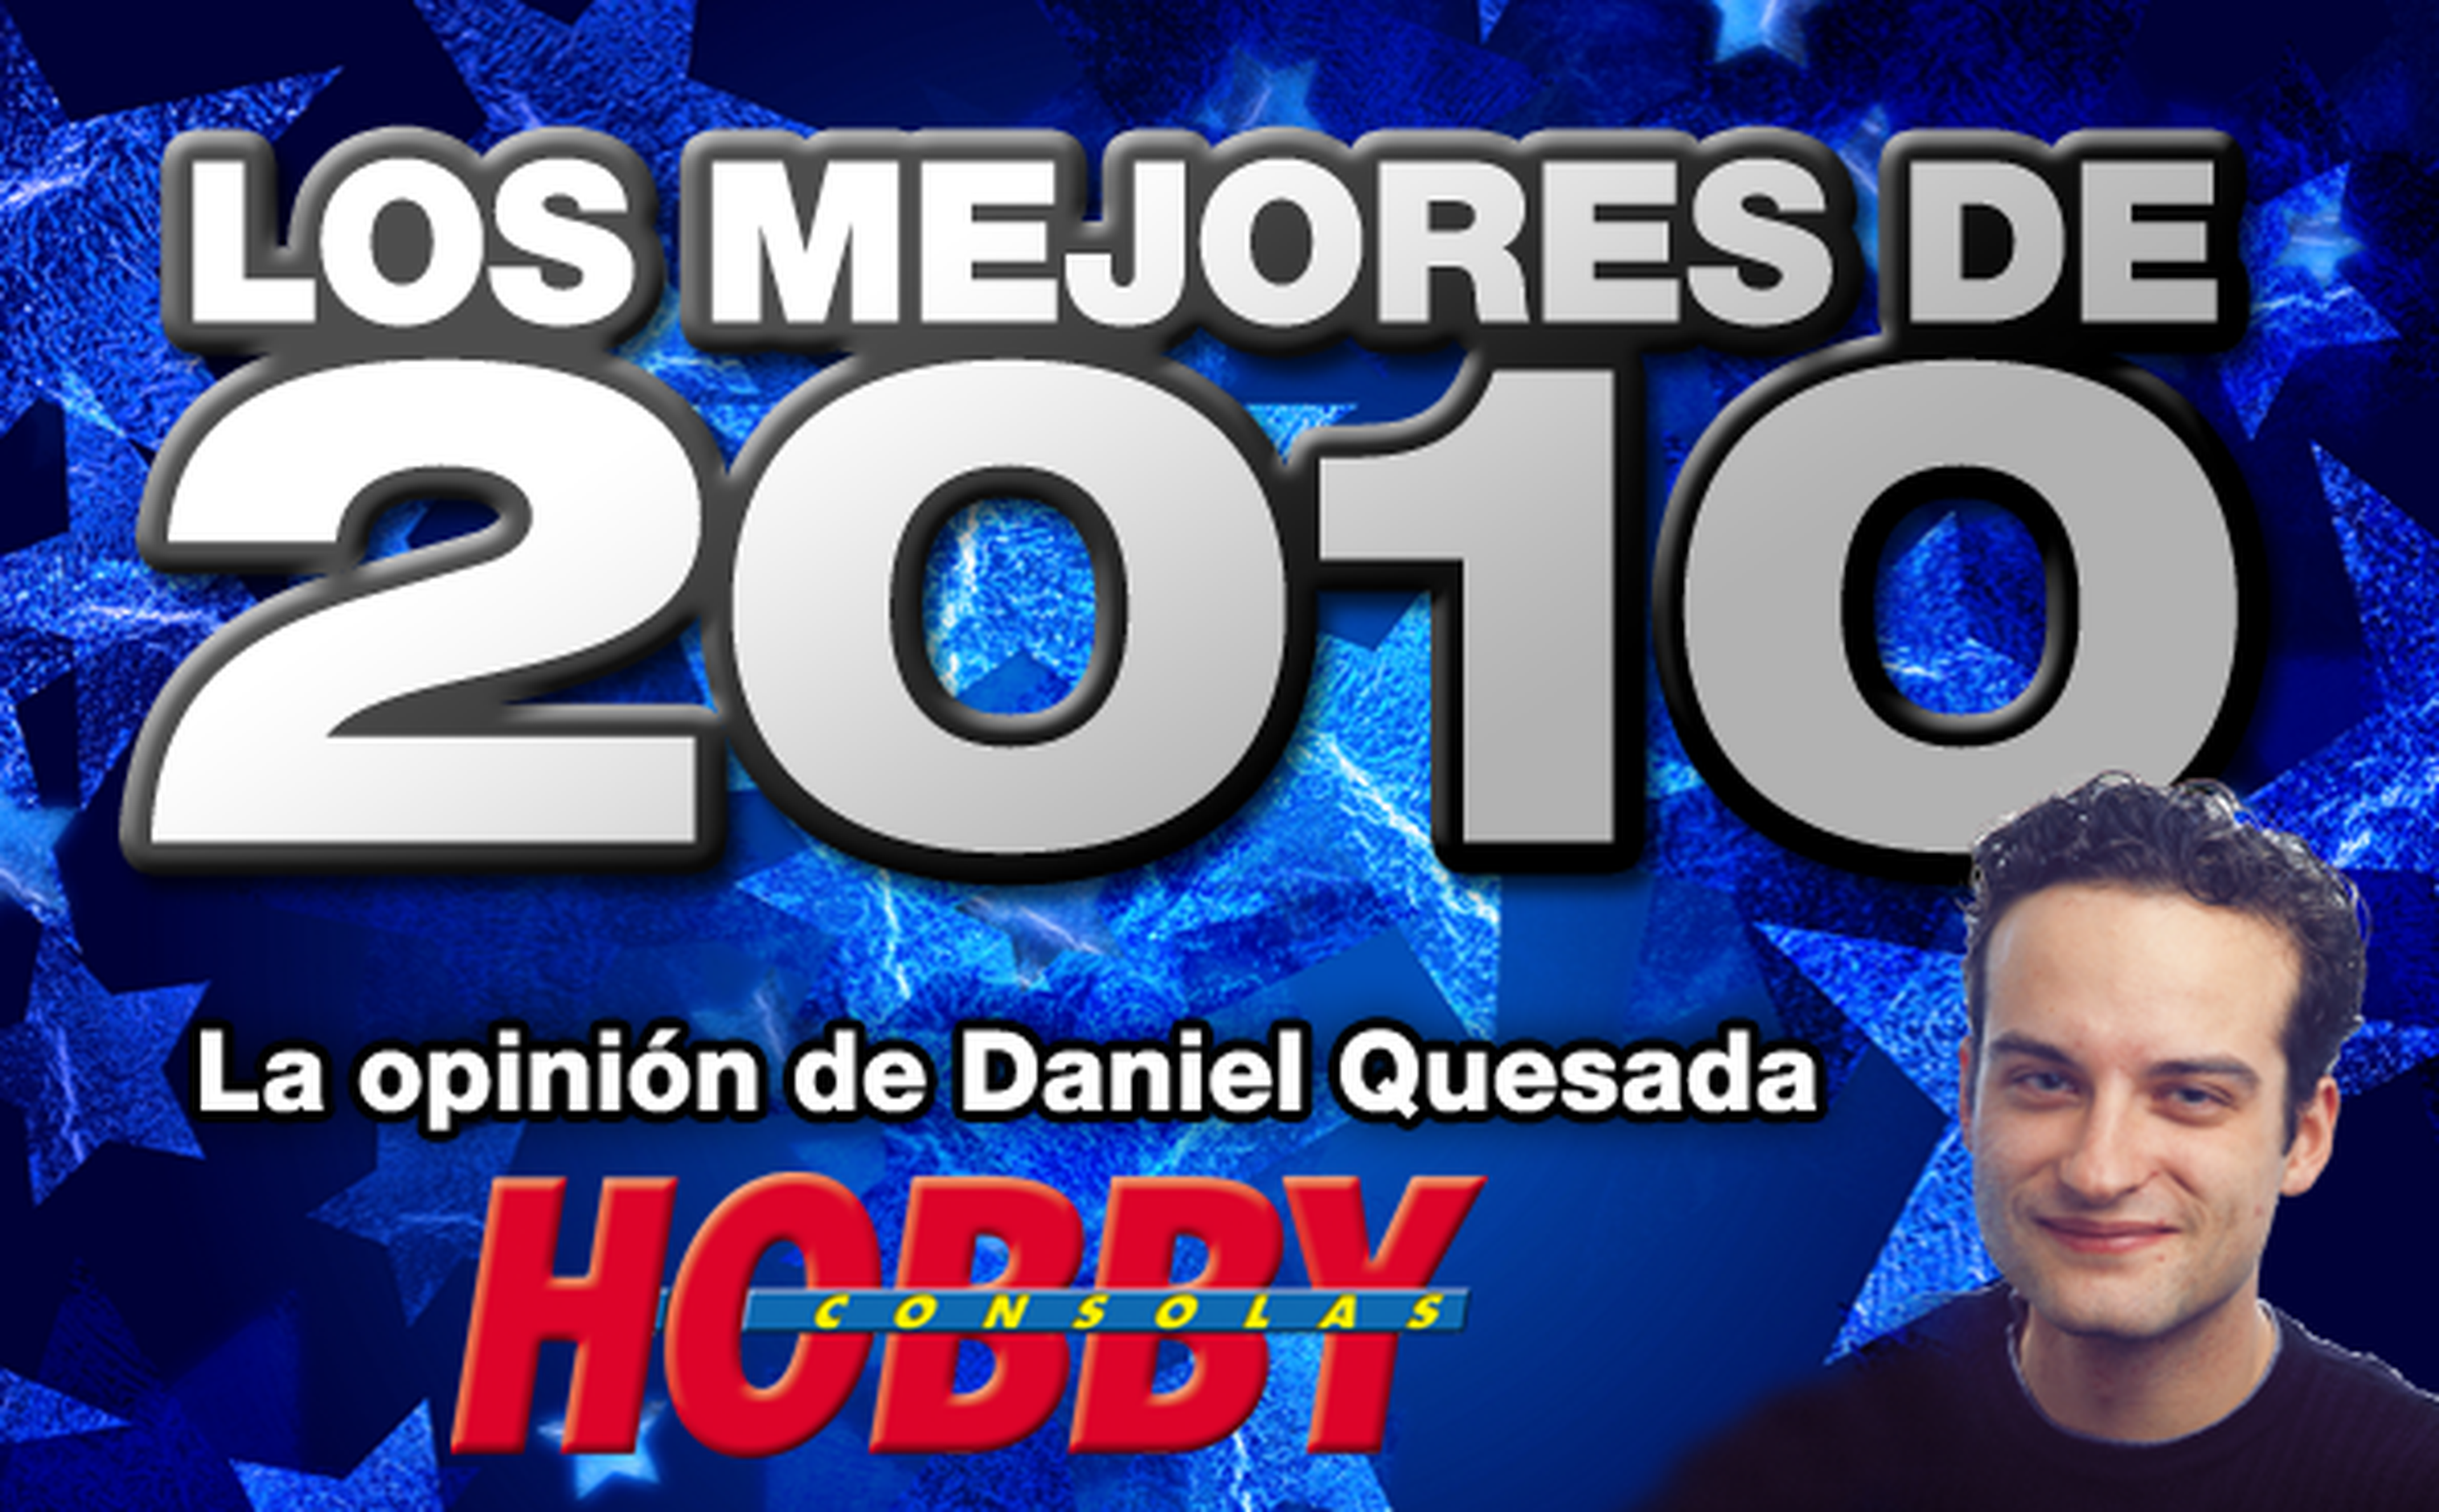 Los mejores de 2010: Daniel Quesada